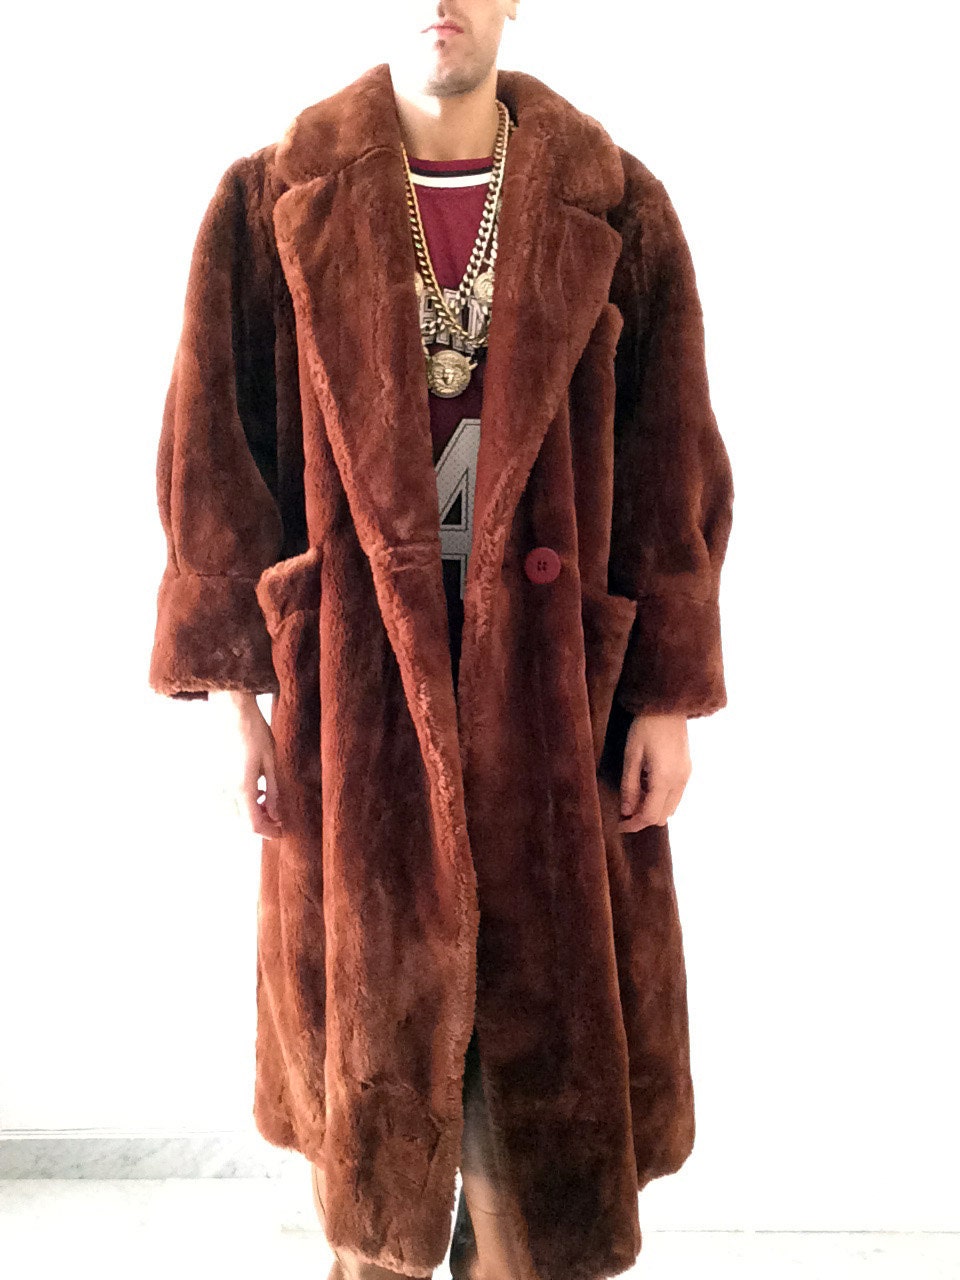 Authentic Vintage Fur Coat / Gangster Rapper / by MaisonChicletol